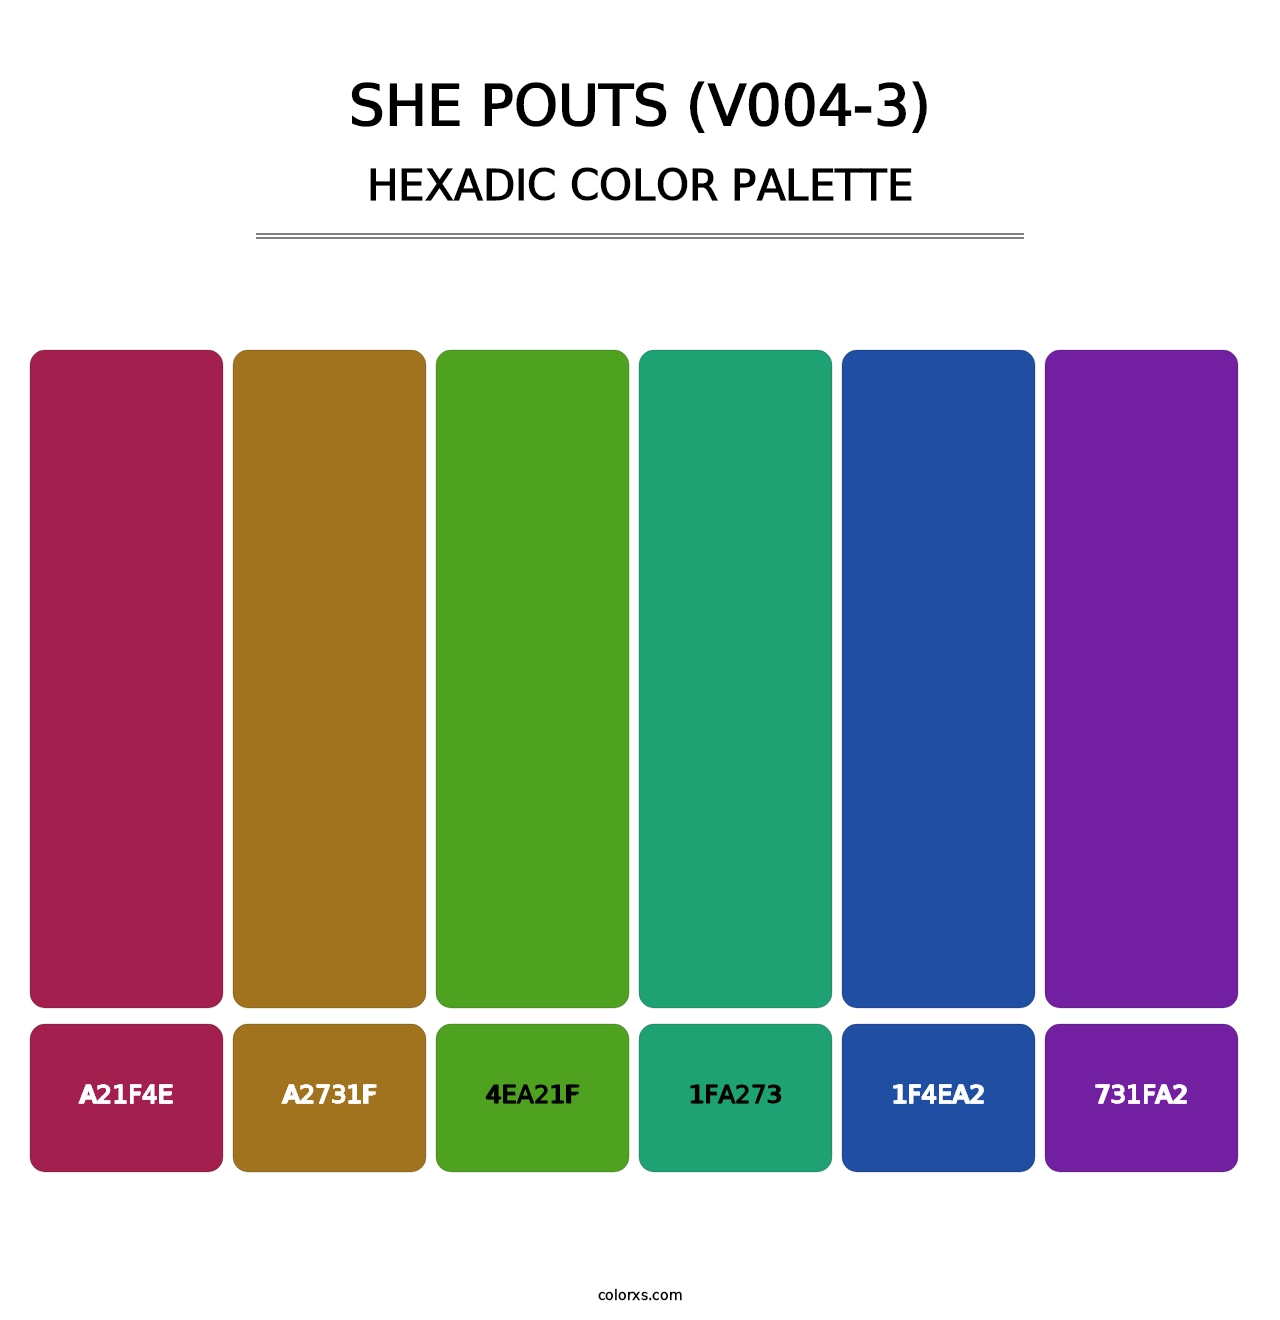 She Pouts (V004-3) - Hexadic Color Palette